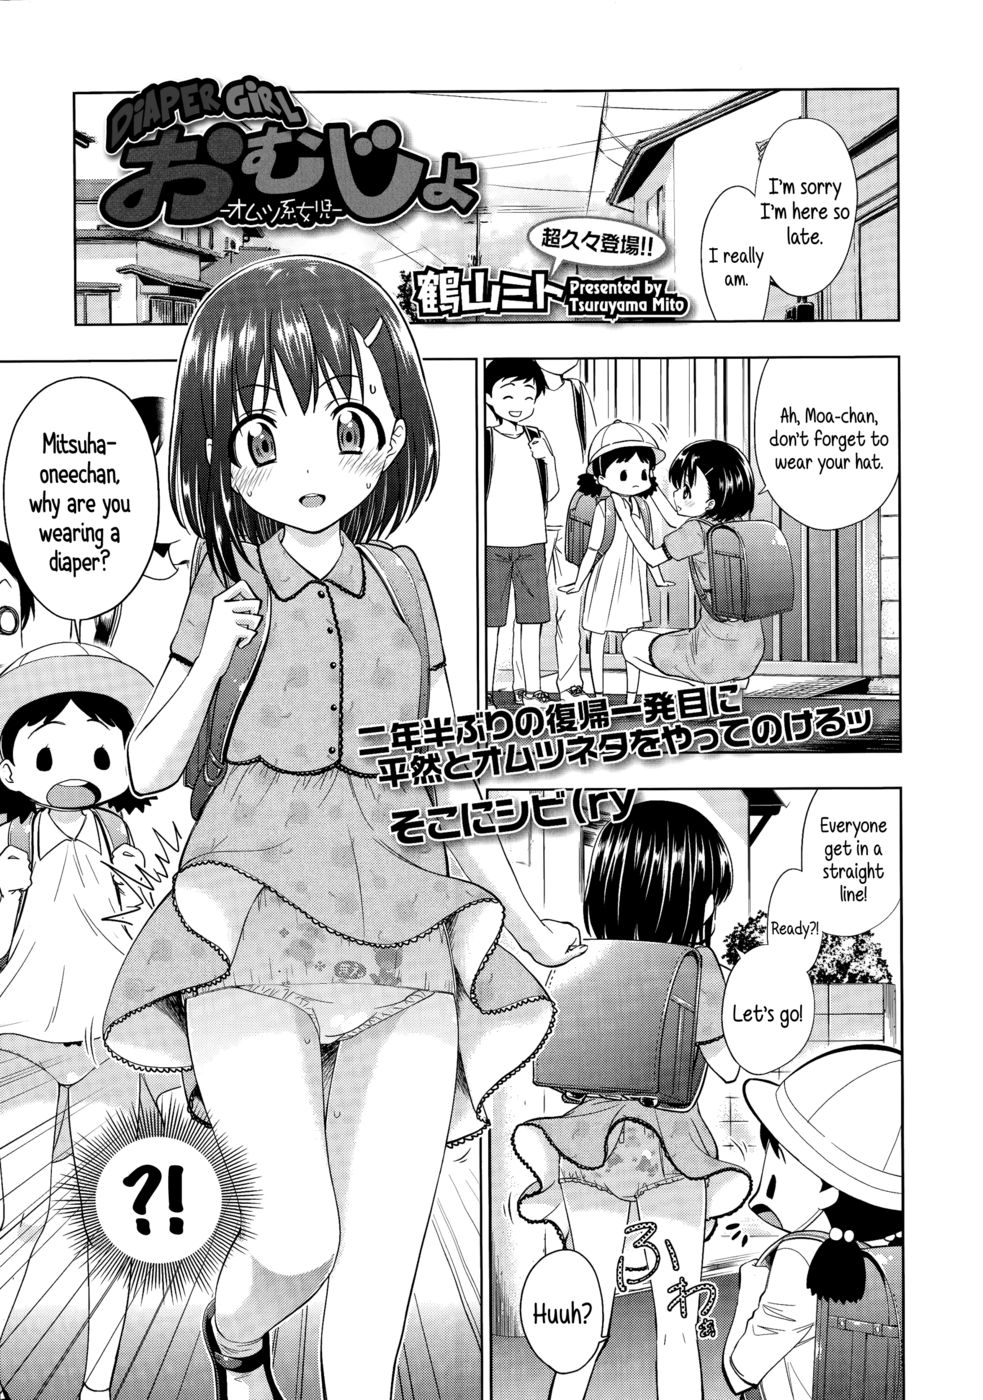 Anime Hentai Girl Pooping Video - Read Diaper Girl Original Work henta manga xxx manga hentai flash